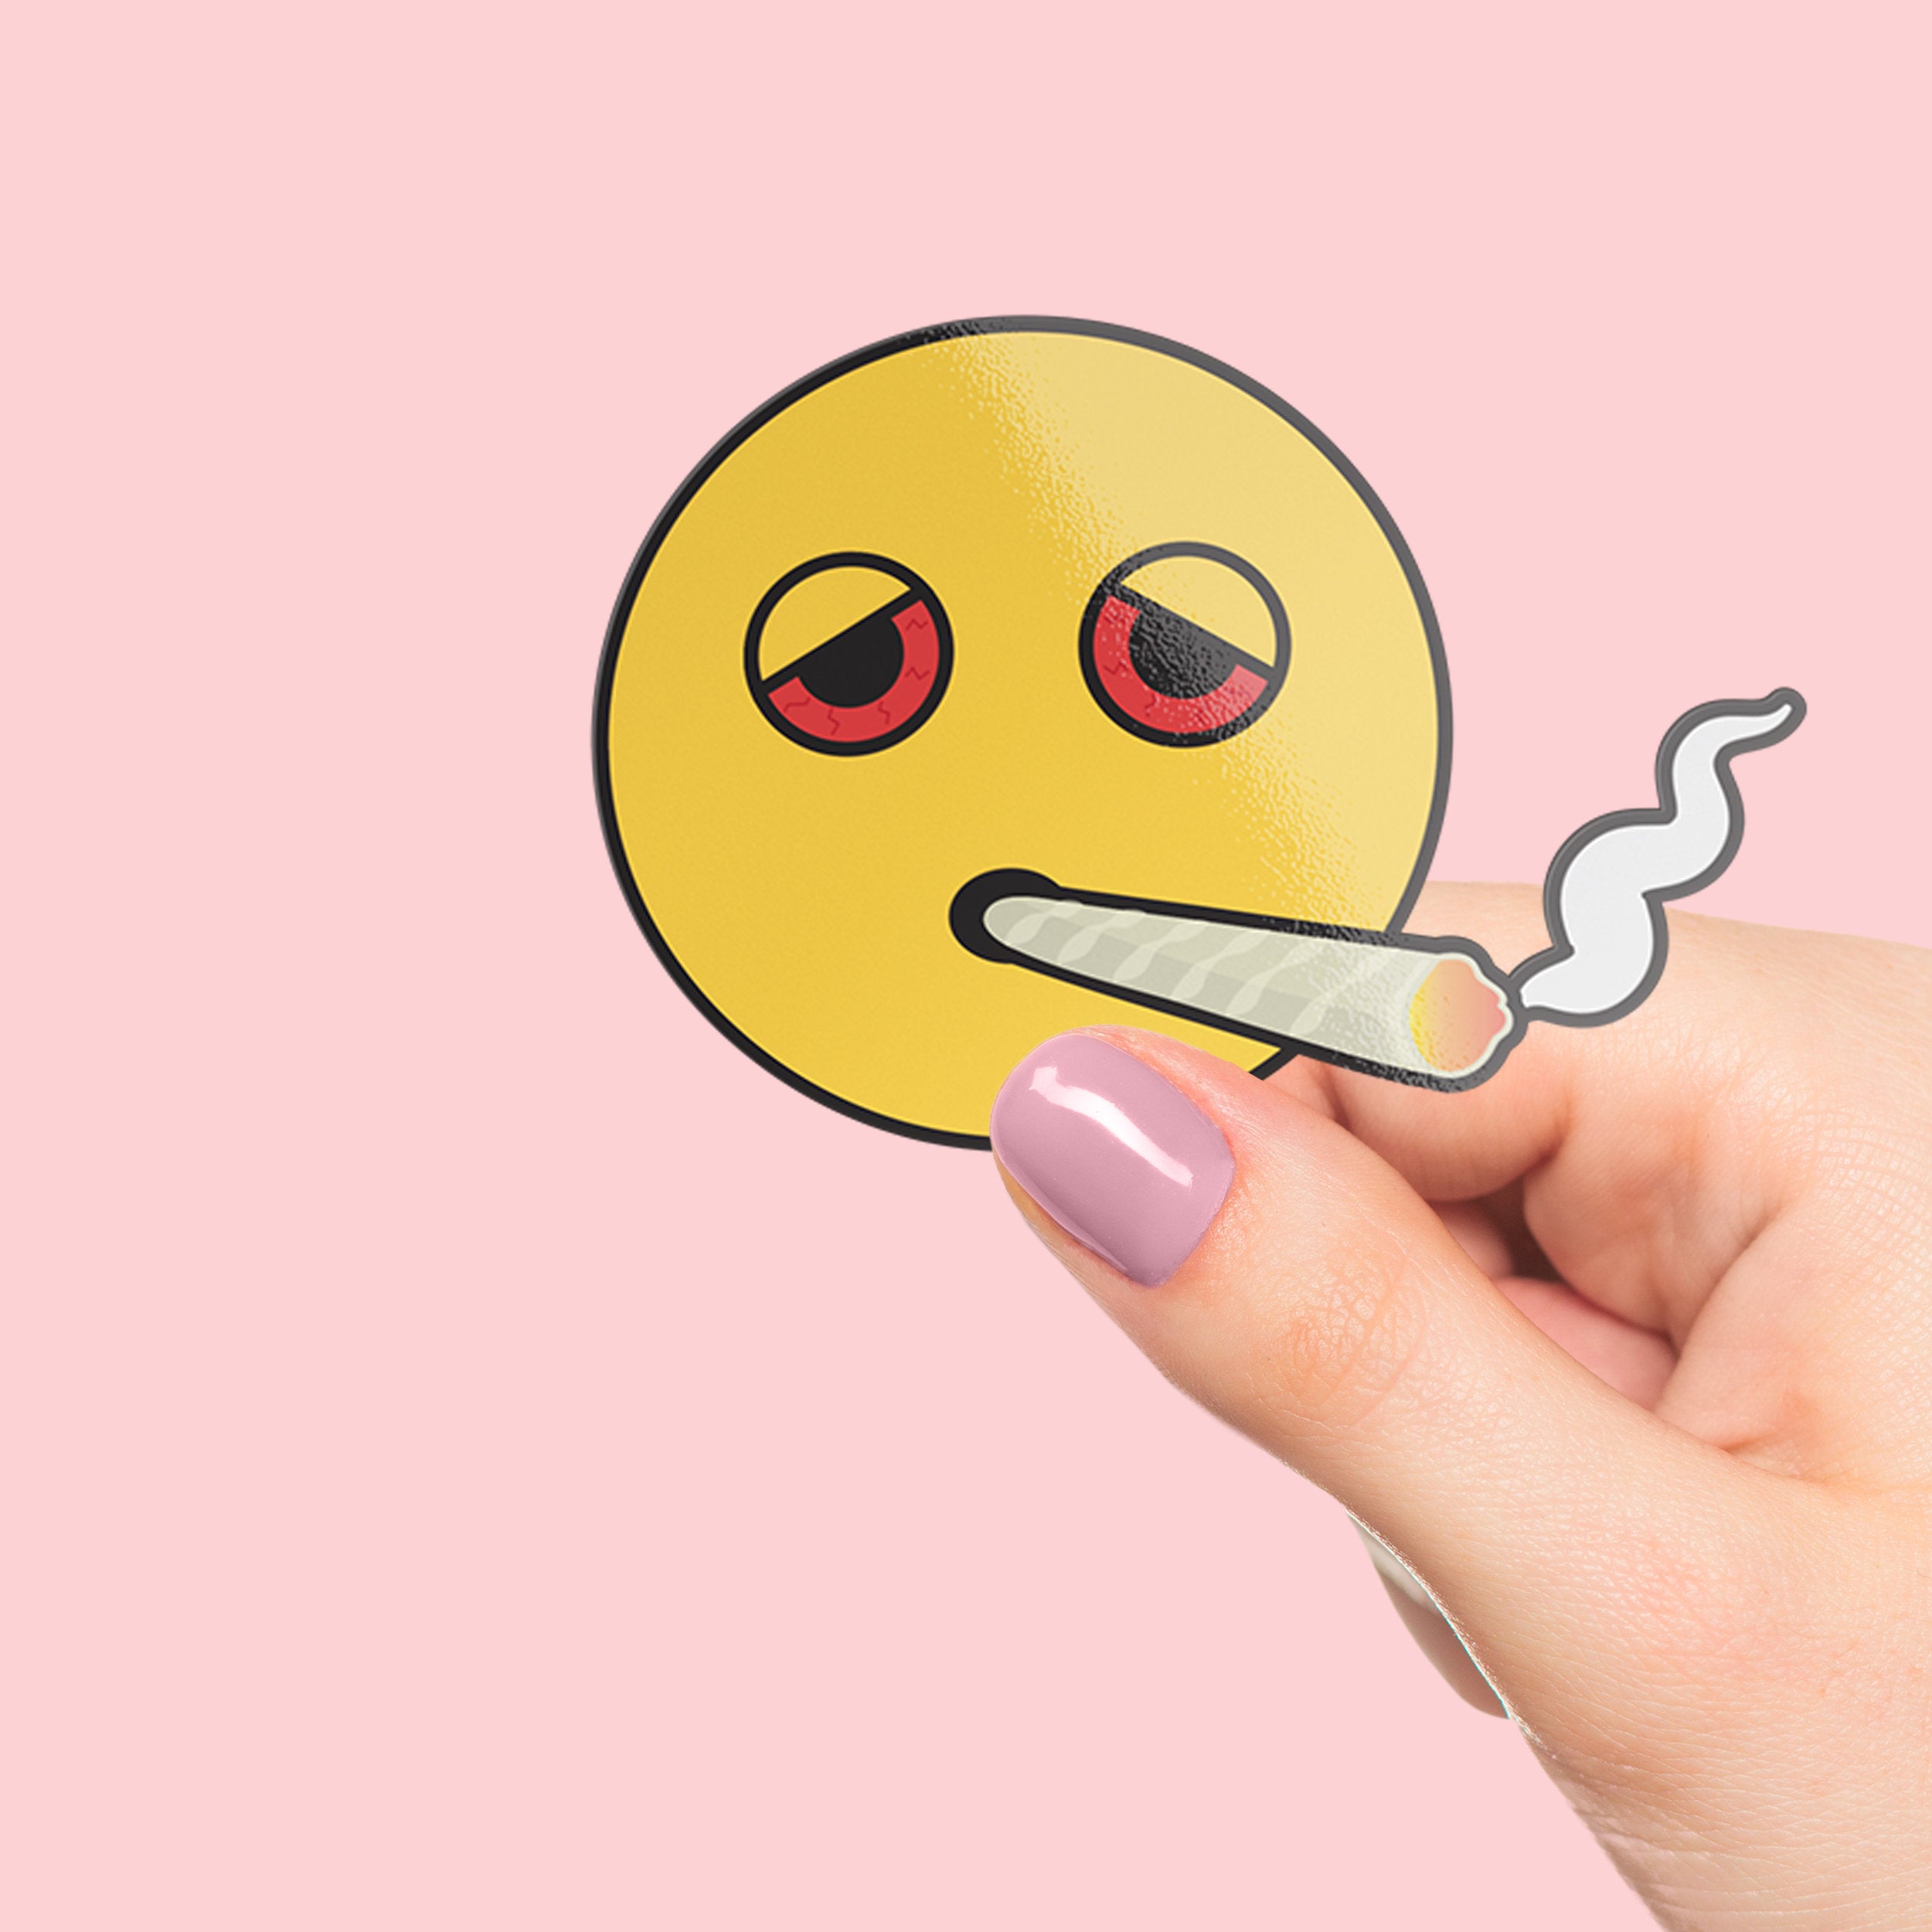 Smoking Joint Emoji Premium Vinyl Sticker, Weed Hydroflask Labels, Laptop Decal, Stoner Gifts